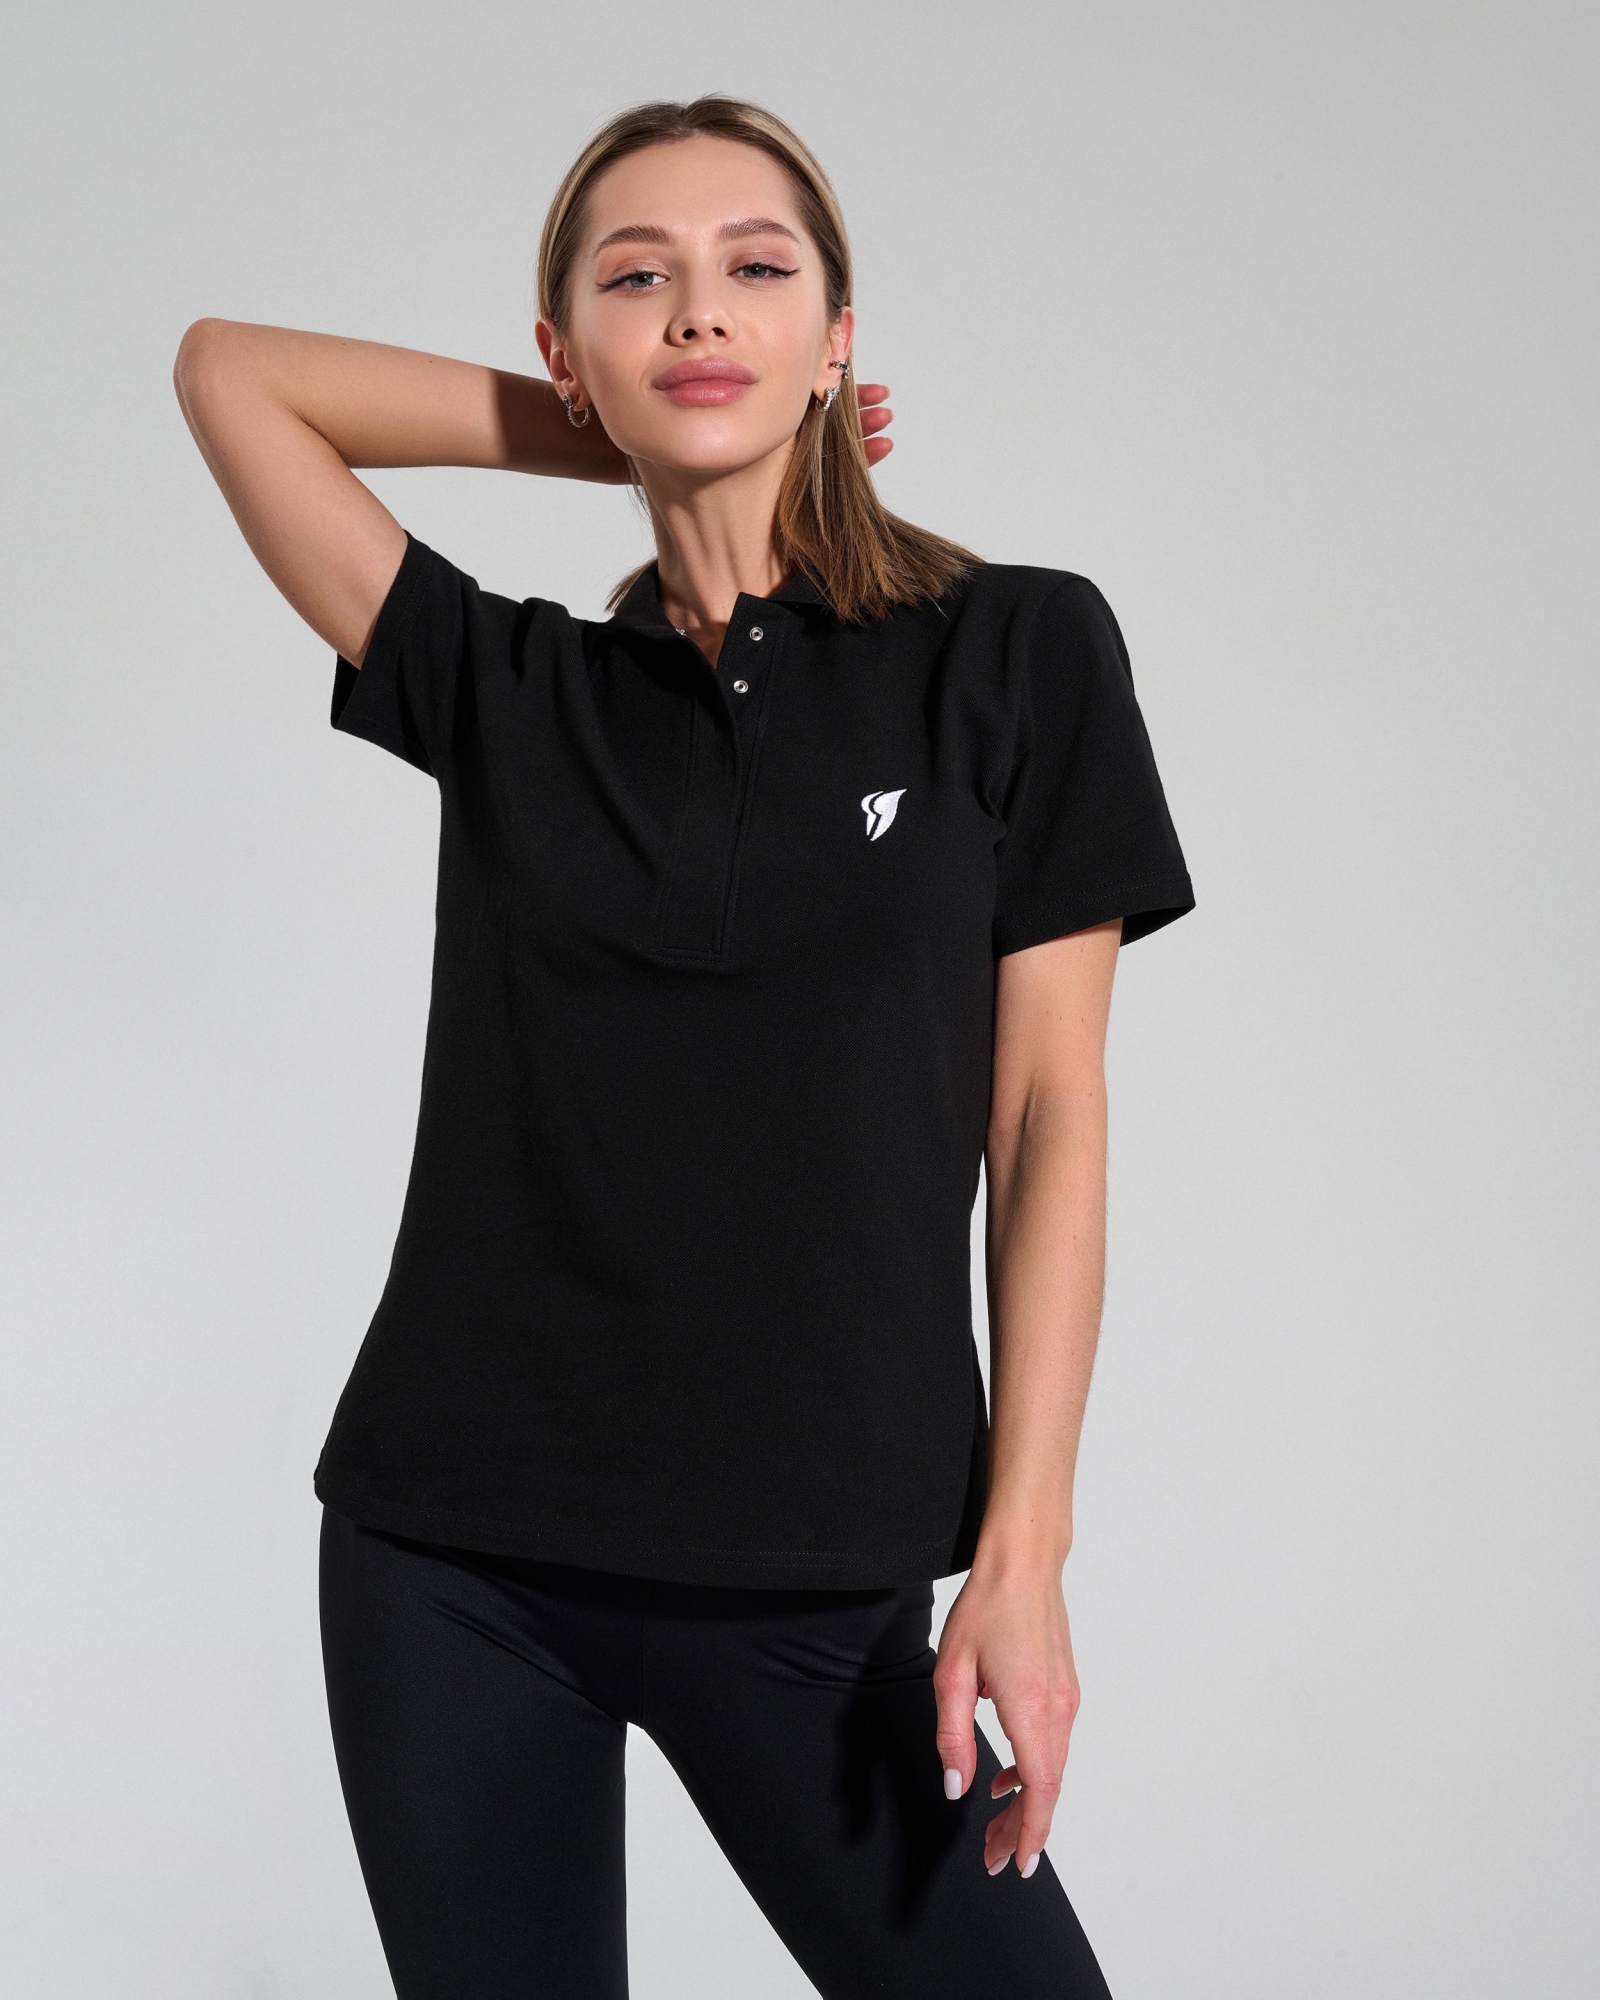 Bona Fide: T-Shirt Polo "Black" фото 6